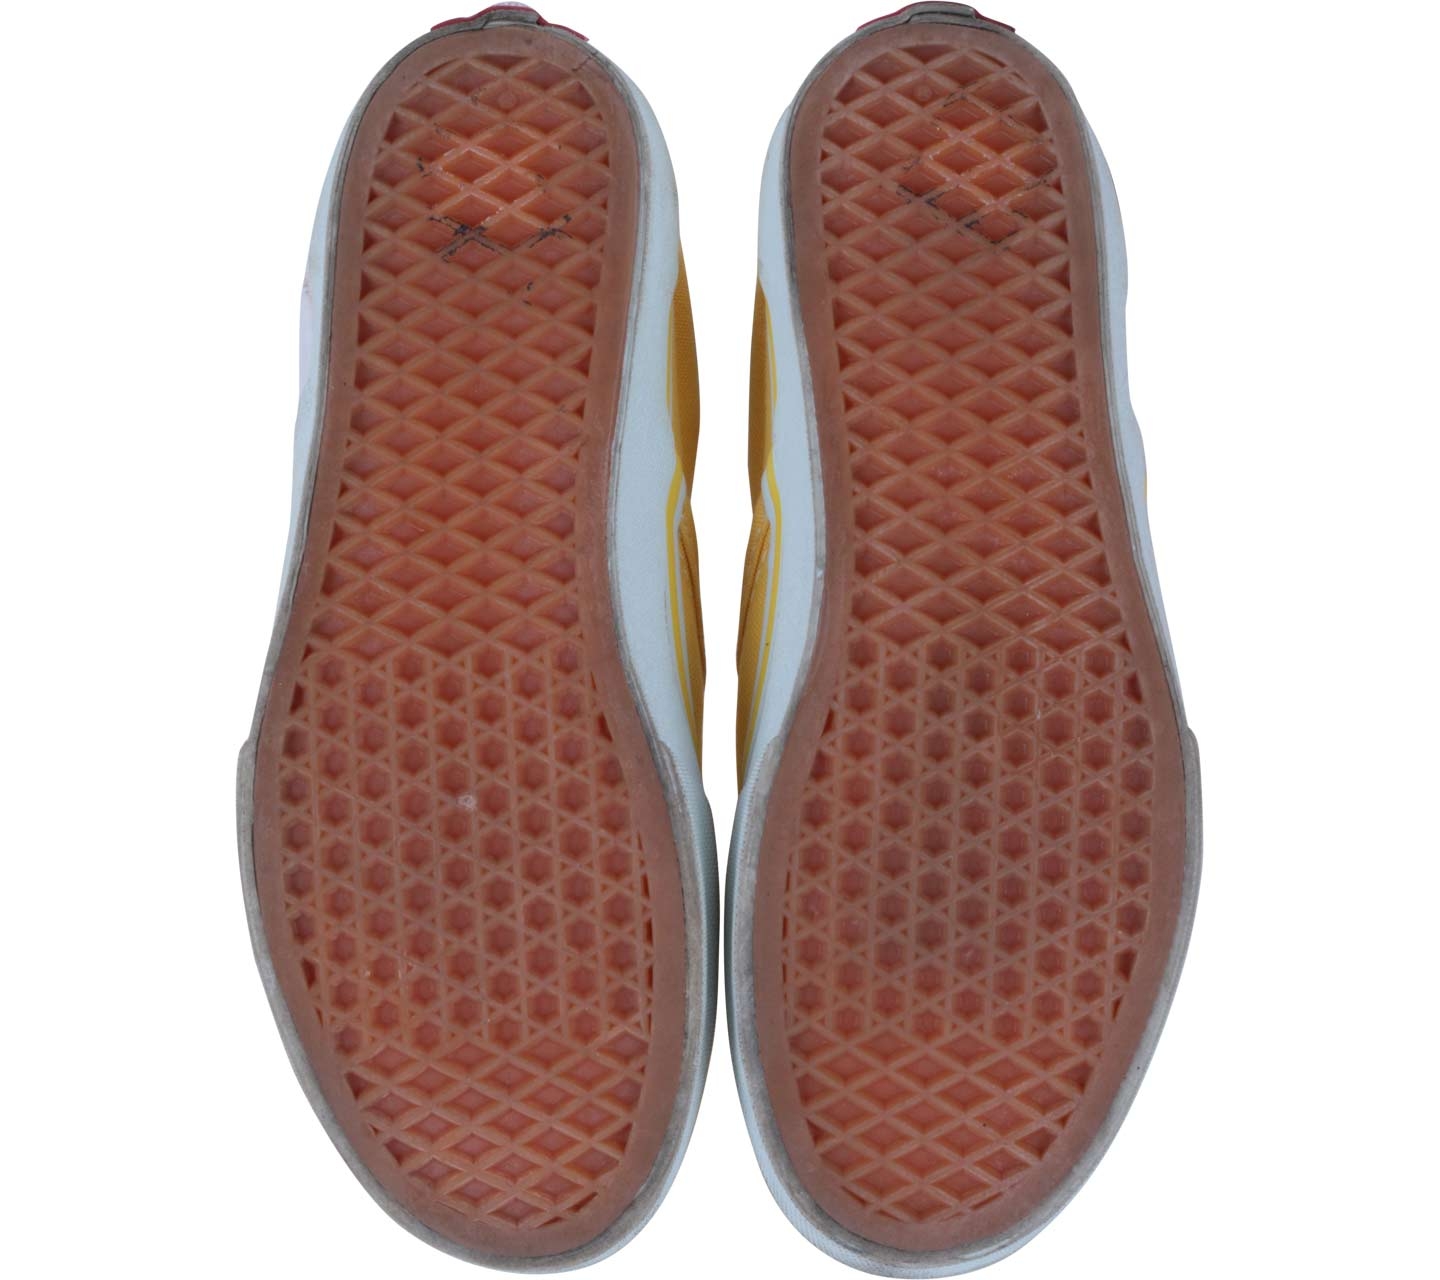 Vans Yellow Classic Slip-On Sneakers